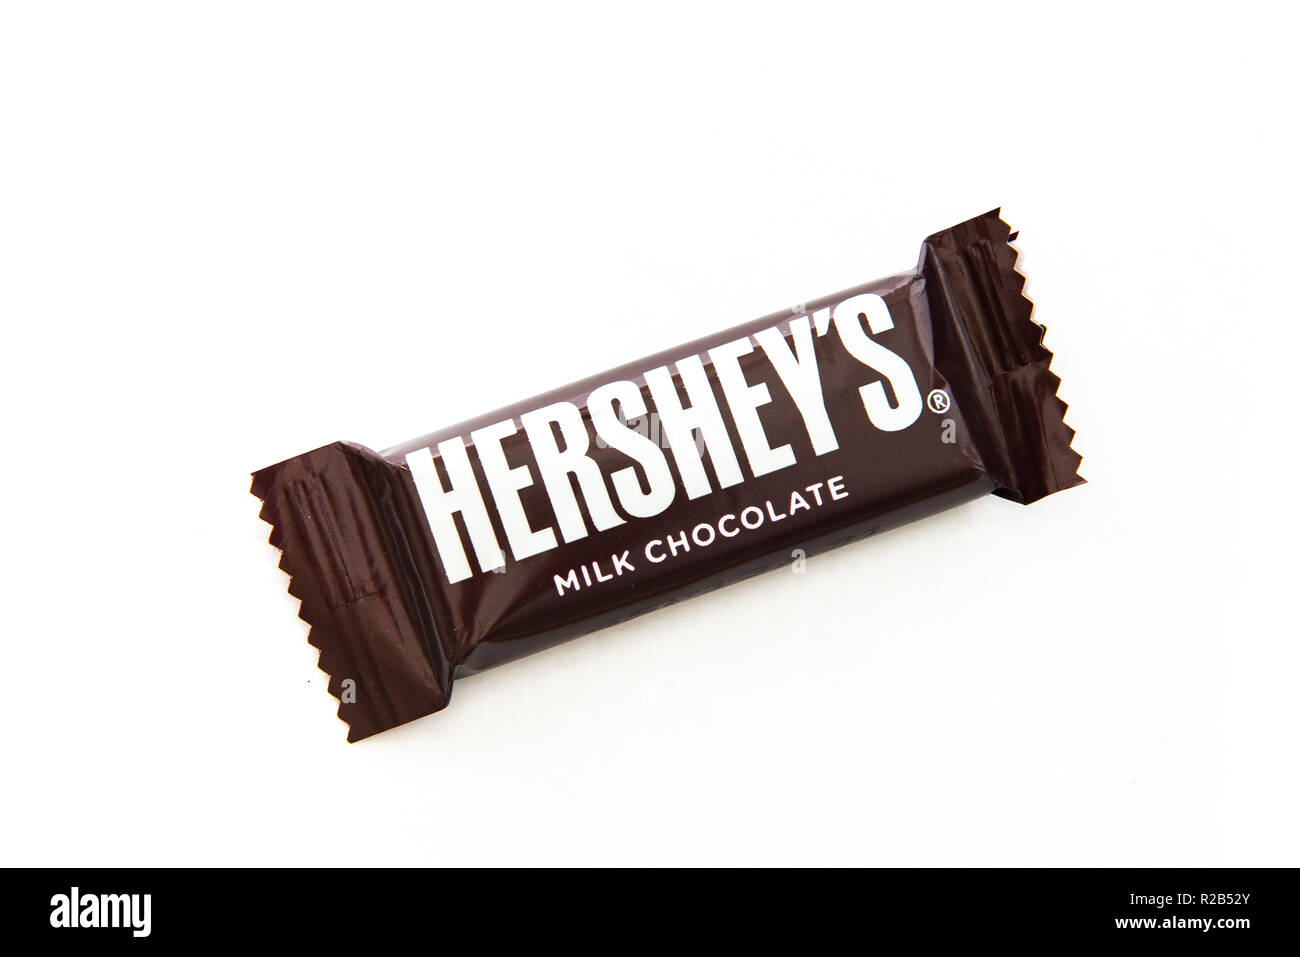 Un snack size Hershey's Chocolate con leche bares aislados. Foto de stock